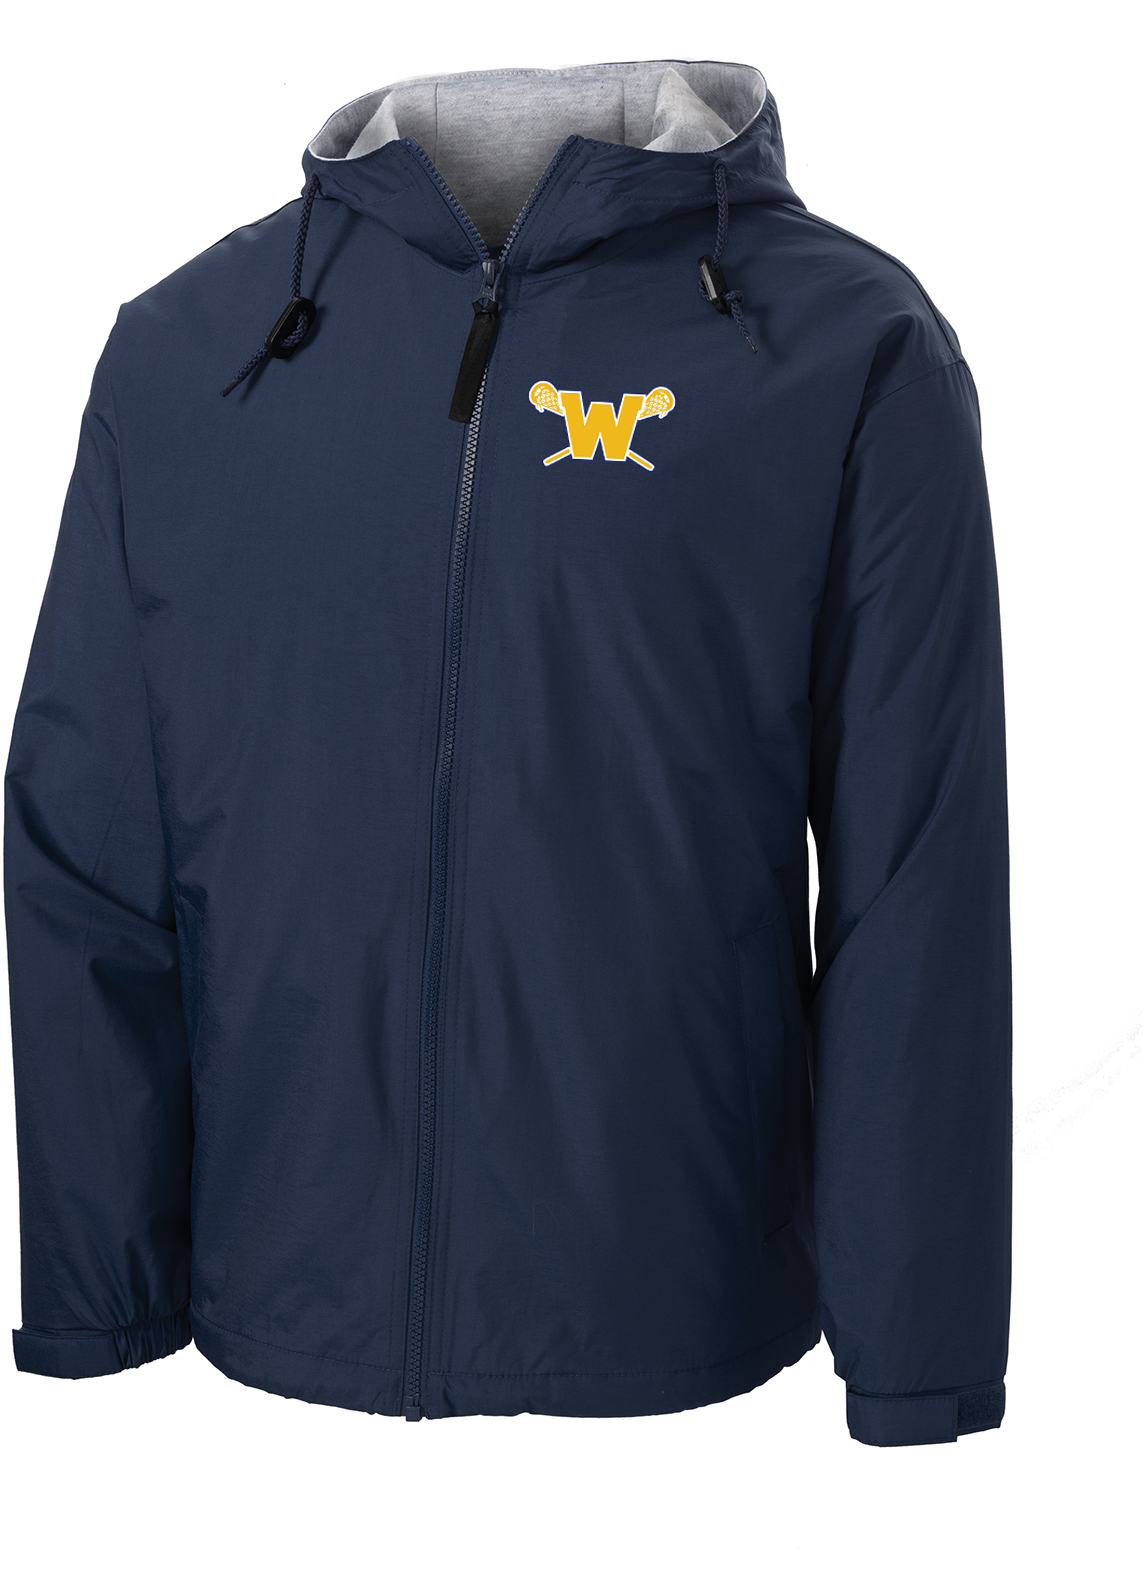 Webster Lacrosse Navy Hooded Jacket